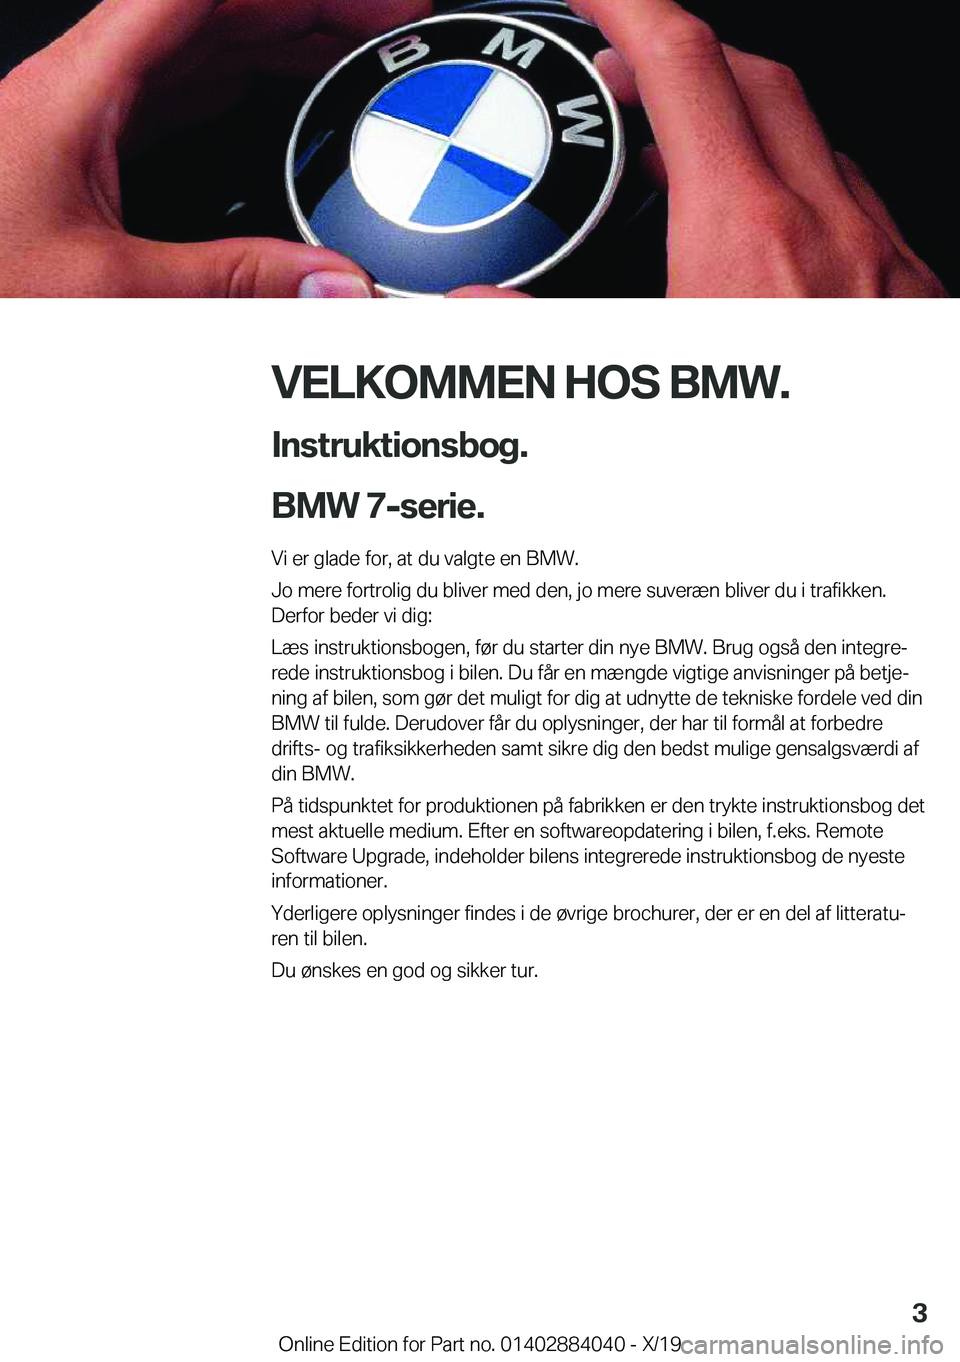 BMW 7 SERIES 2020  InstruktionsbØger (in Danish) �V�E�L�K�O�M�M�E�N��H�O�S��B�M�W�.
�I�n�s�t�r�u�k�t�i�o�n�s�b�o�g�.
�B�M�W��7�-�s�e�r�i�e�. �V�i��e�r��g�l�a�d�e��f�o�r�,��a�t��d�u��v�a�l�g�t�e��e�n��B�M�W�.
�J�o��m�e�r�e��f�o�r�t�r�o�l